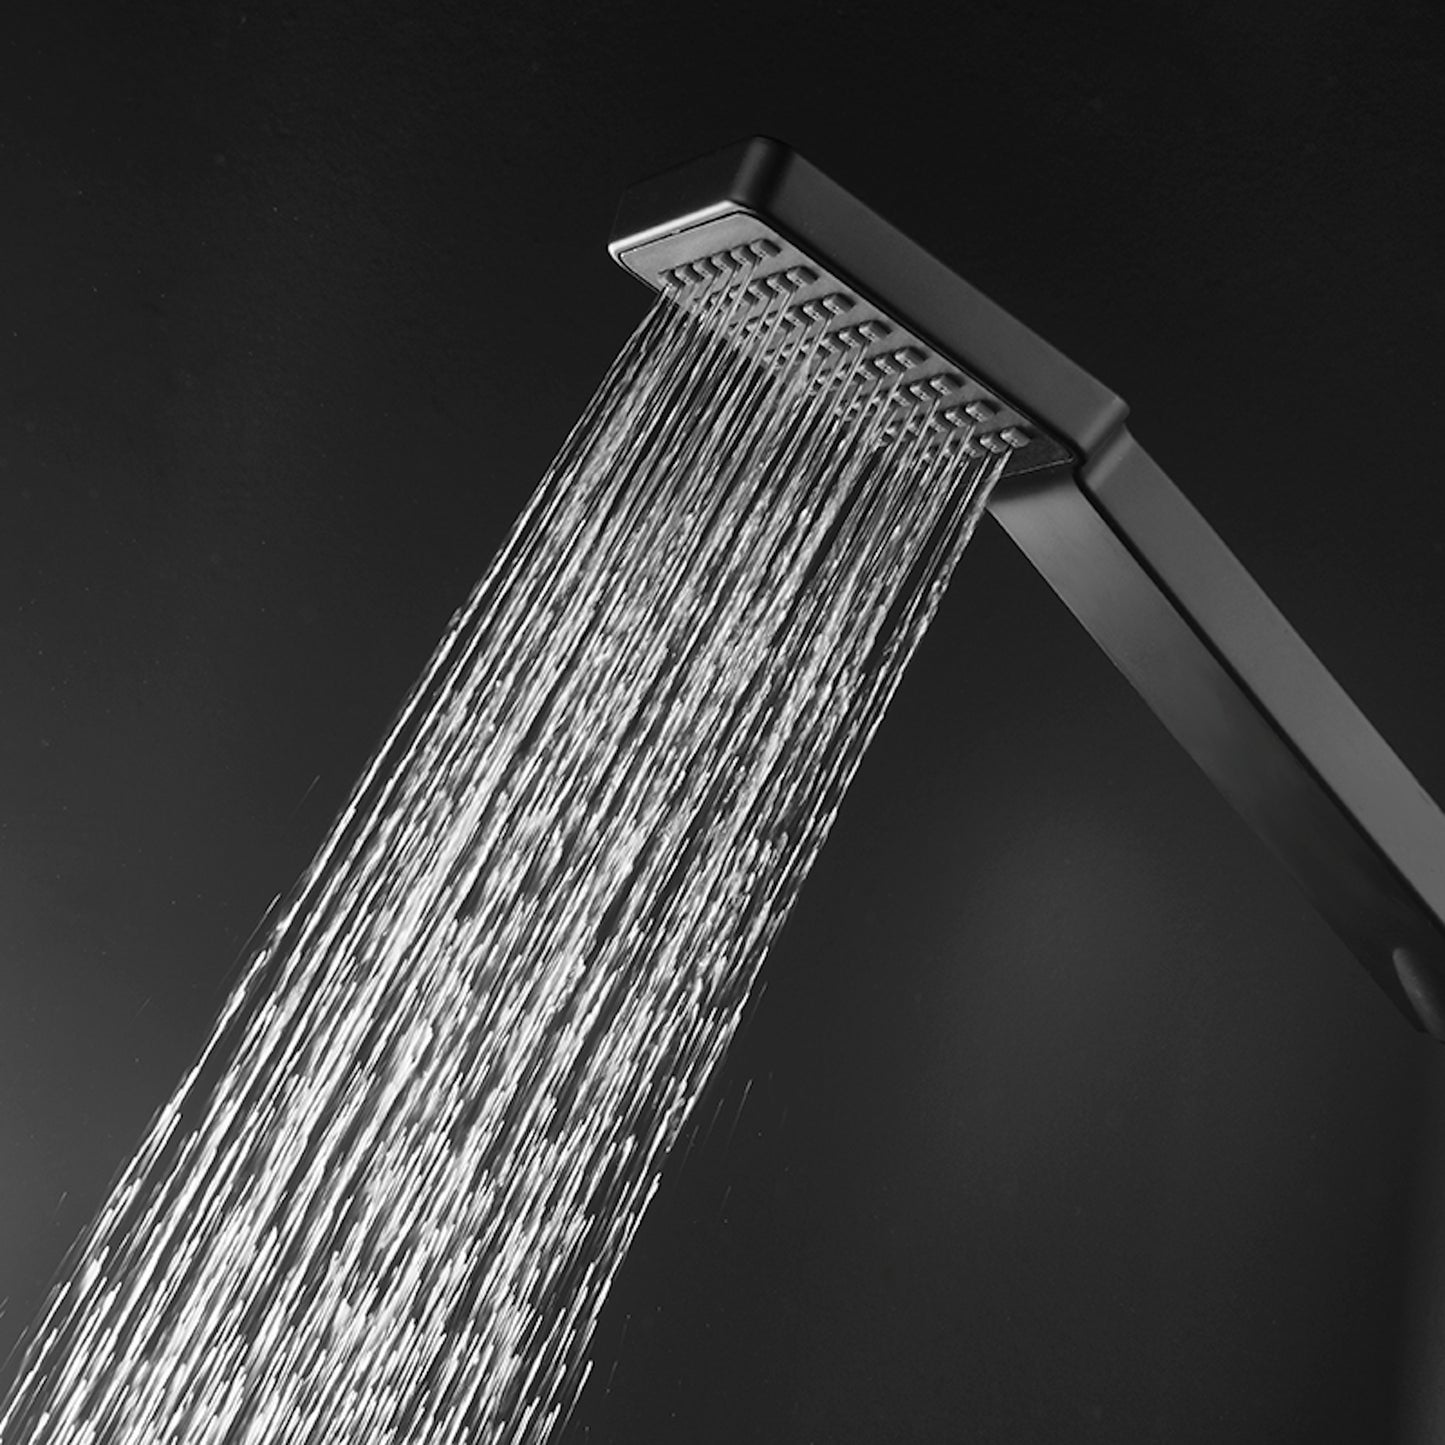 Square contemporary shower slider riser rail kit with handset and hose - black